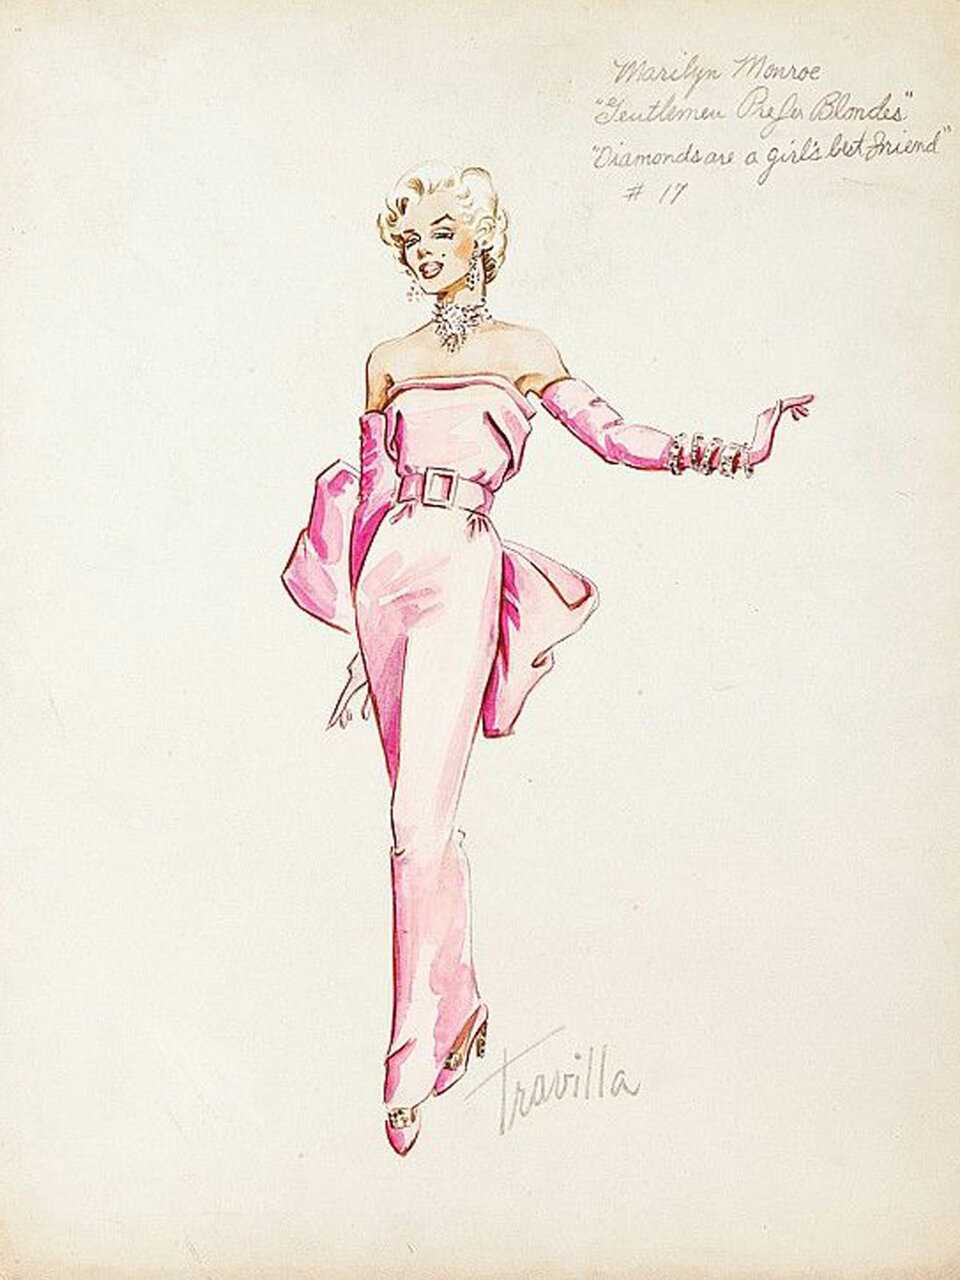 Мэрилин монро в розовом платье